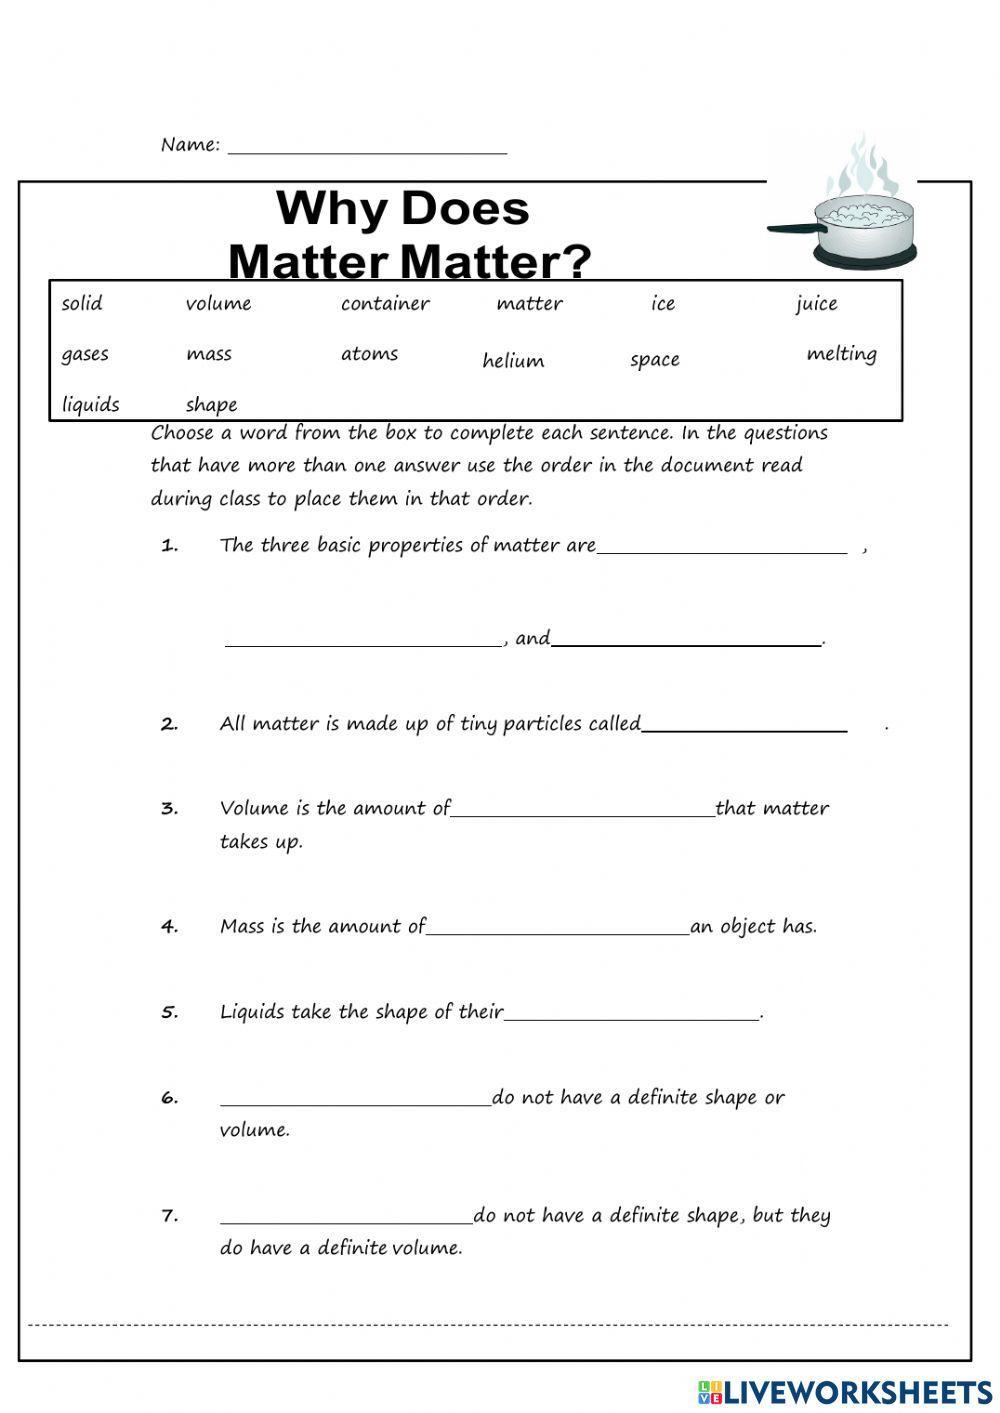 Why Does Matter Matter?